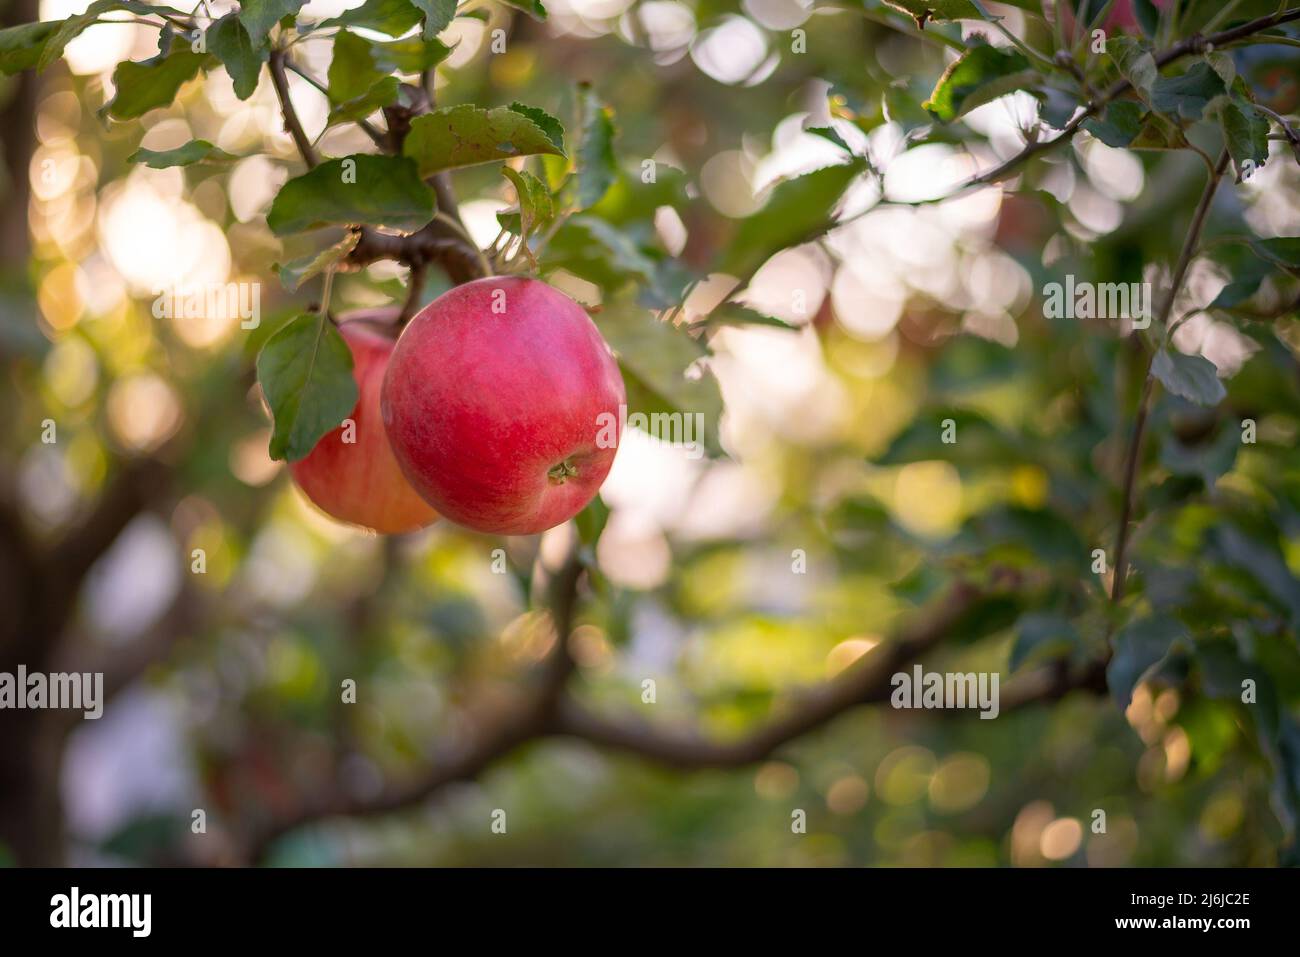 https://c8.alamy.com/comp/2J6JC2E/apple-orchard-with-red-ripe-apples-at-the-farm-organic-food-autumn-harvest-season-tasty-organic-delicious-healthy-2J6JC2E.jpg